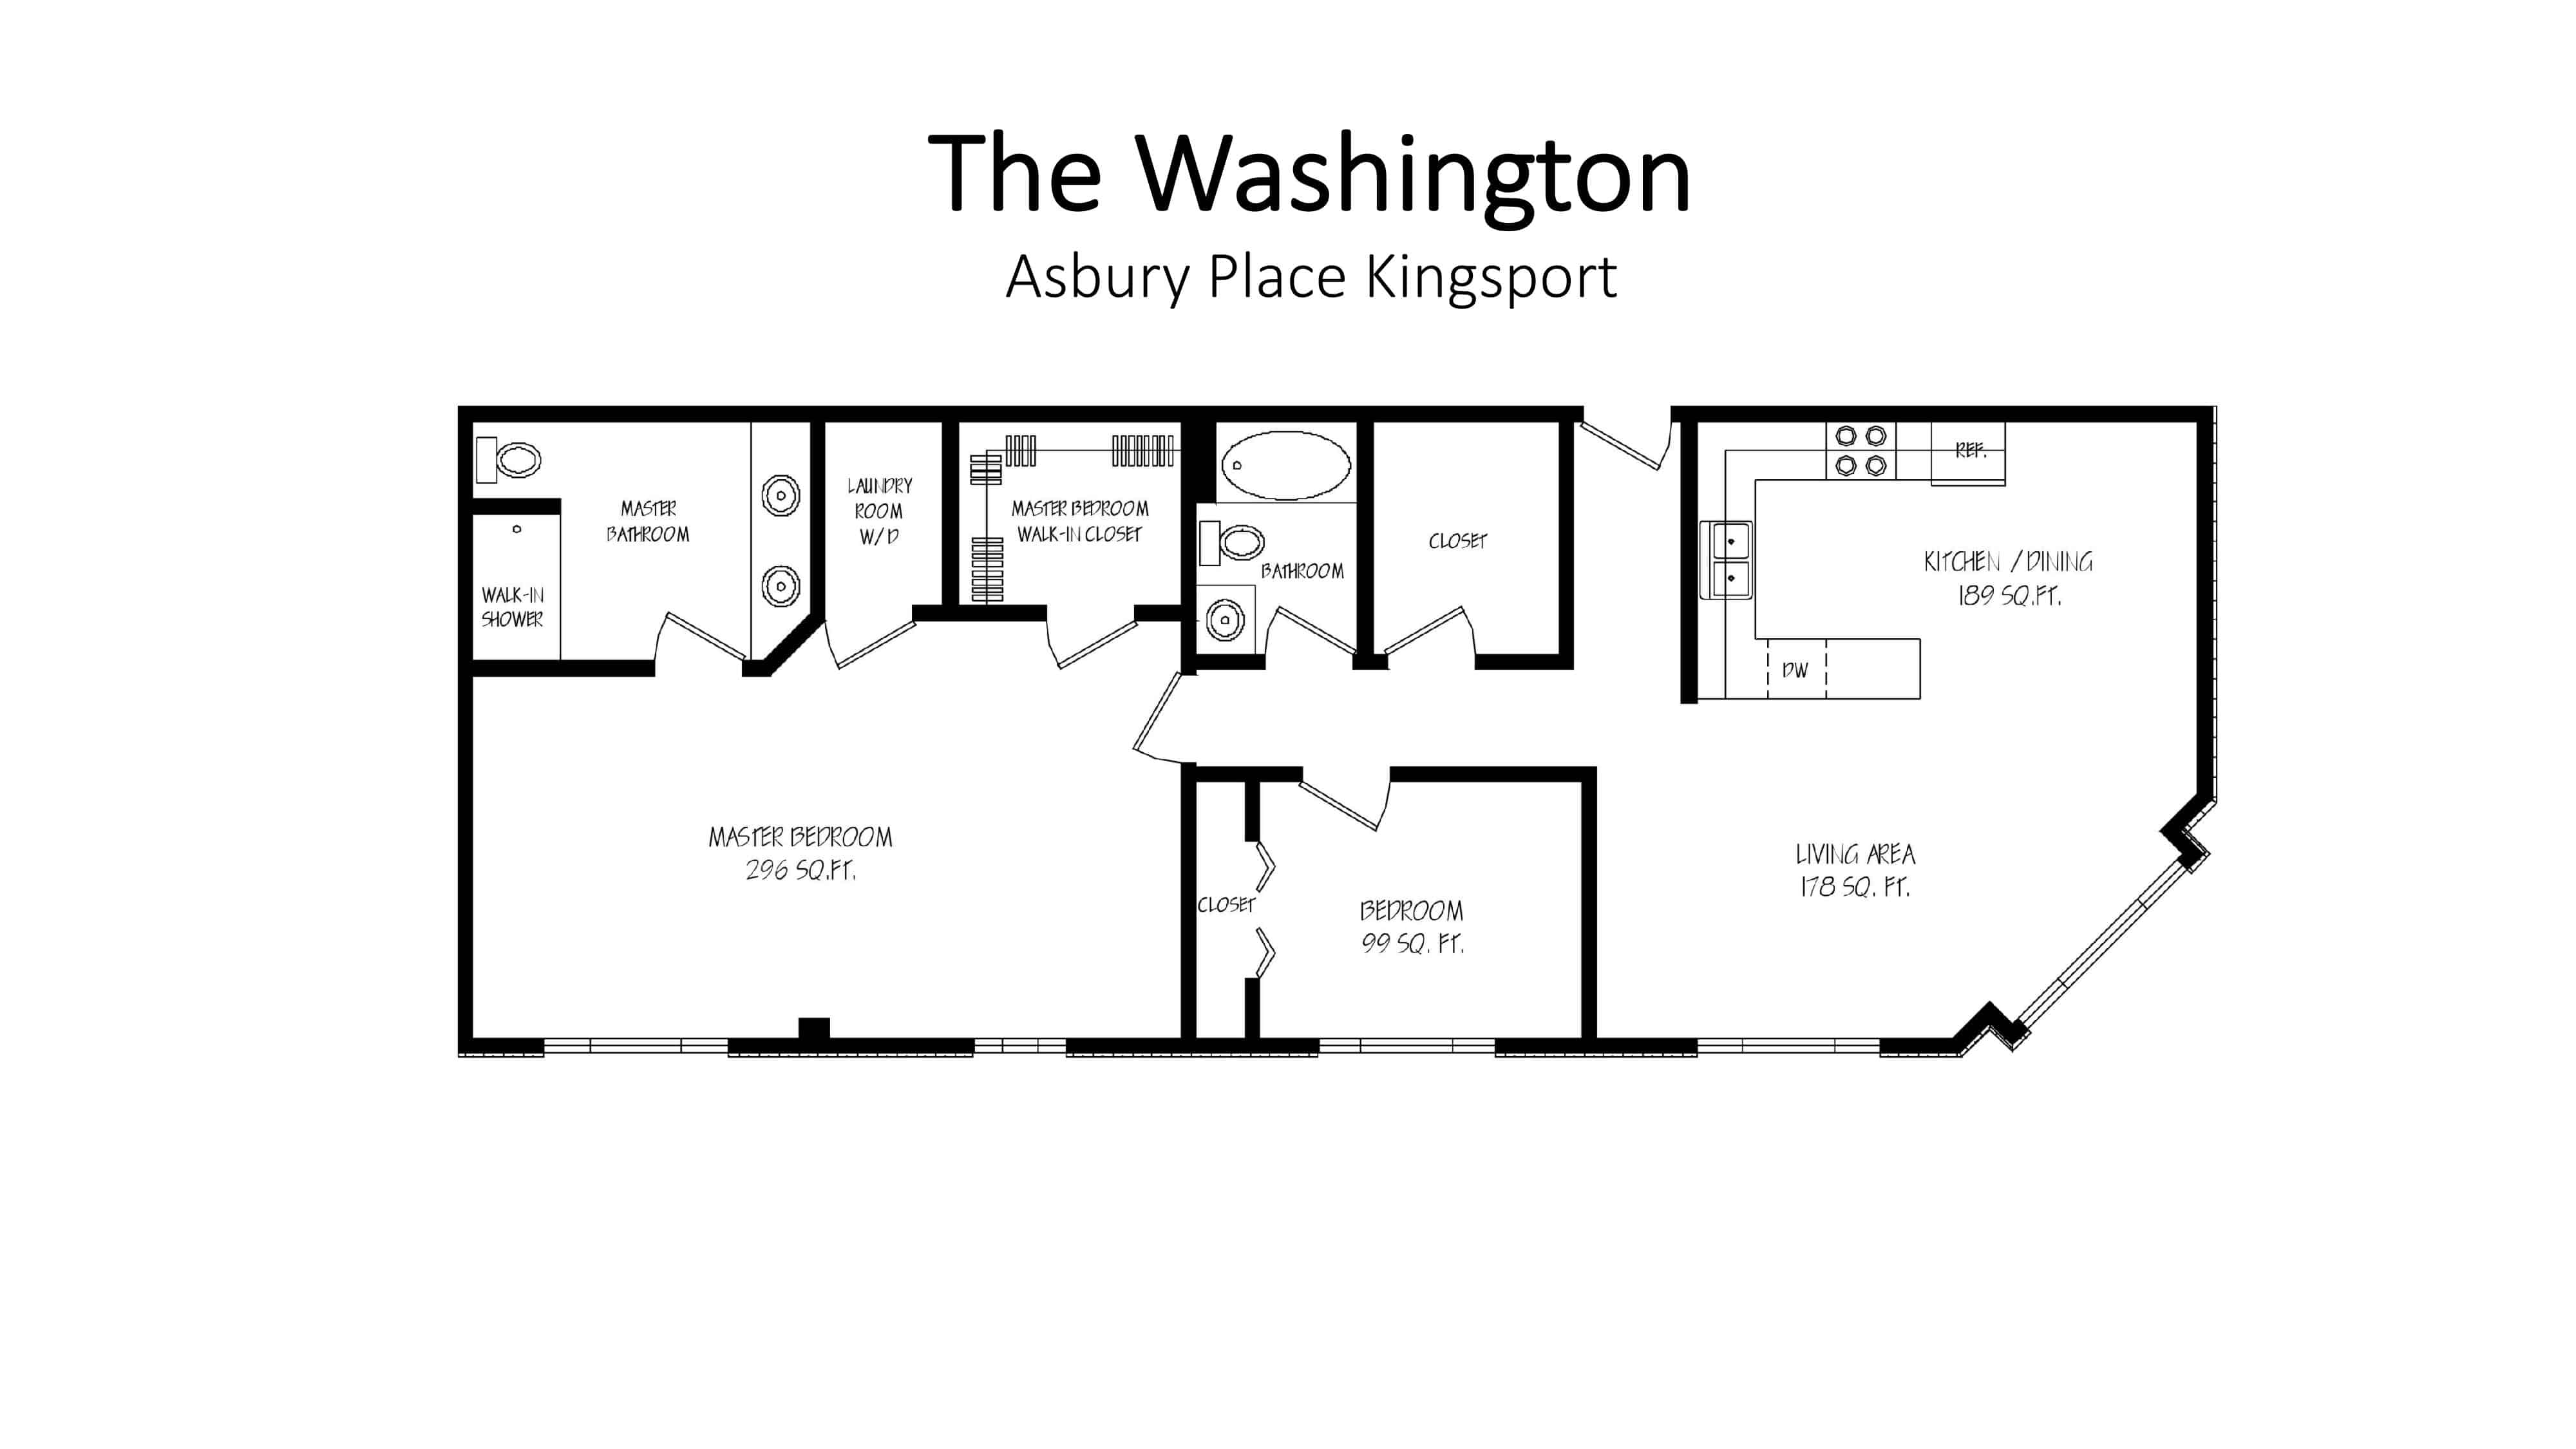 Asbury Place Kingsport The Washington Floorplan